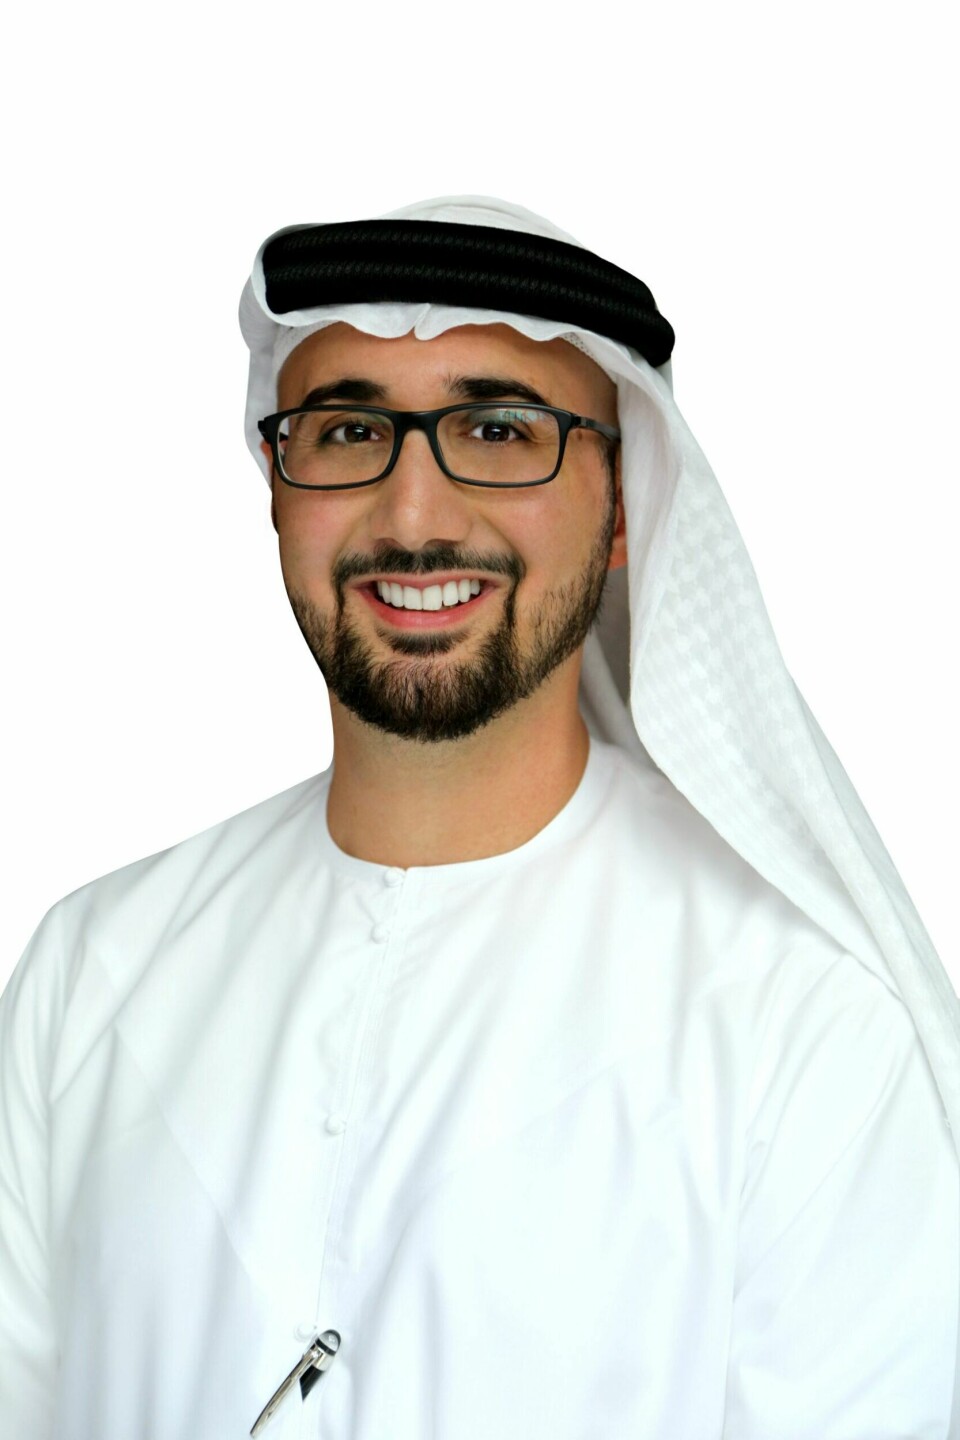 Tariq Bin Hendi, director general of ADIO